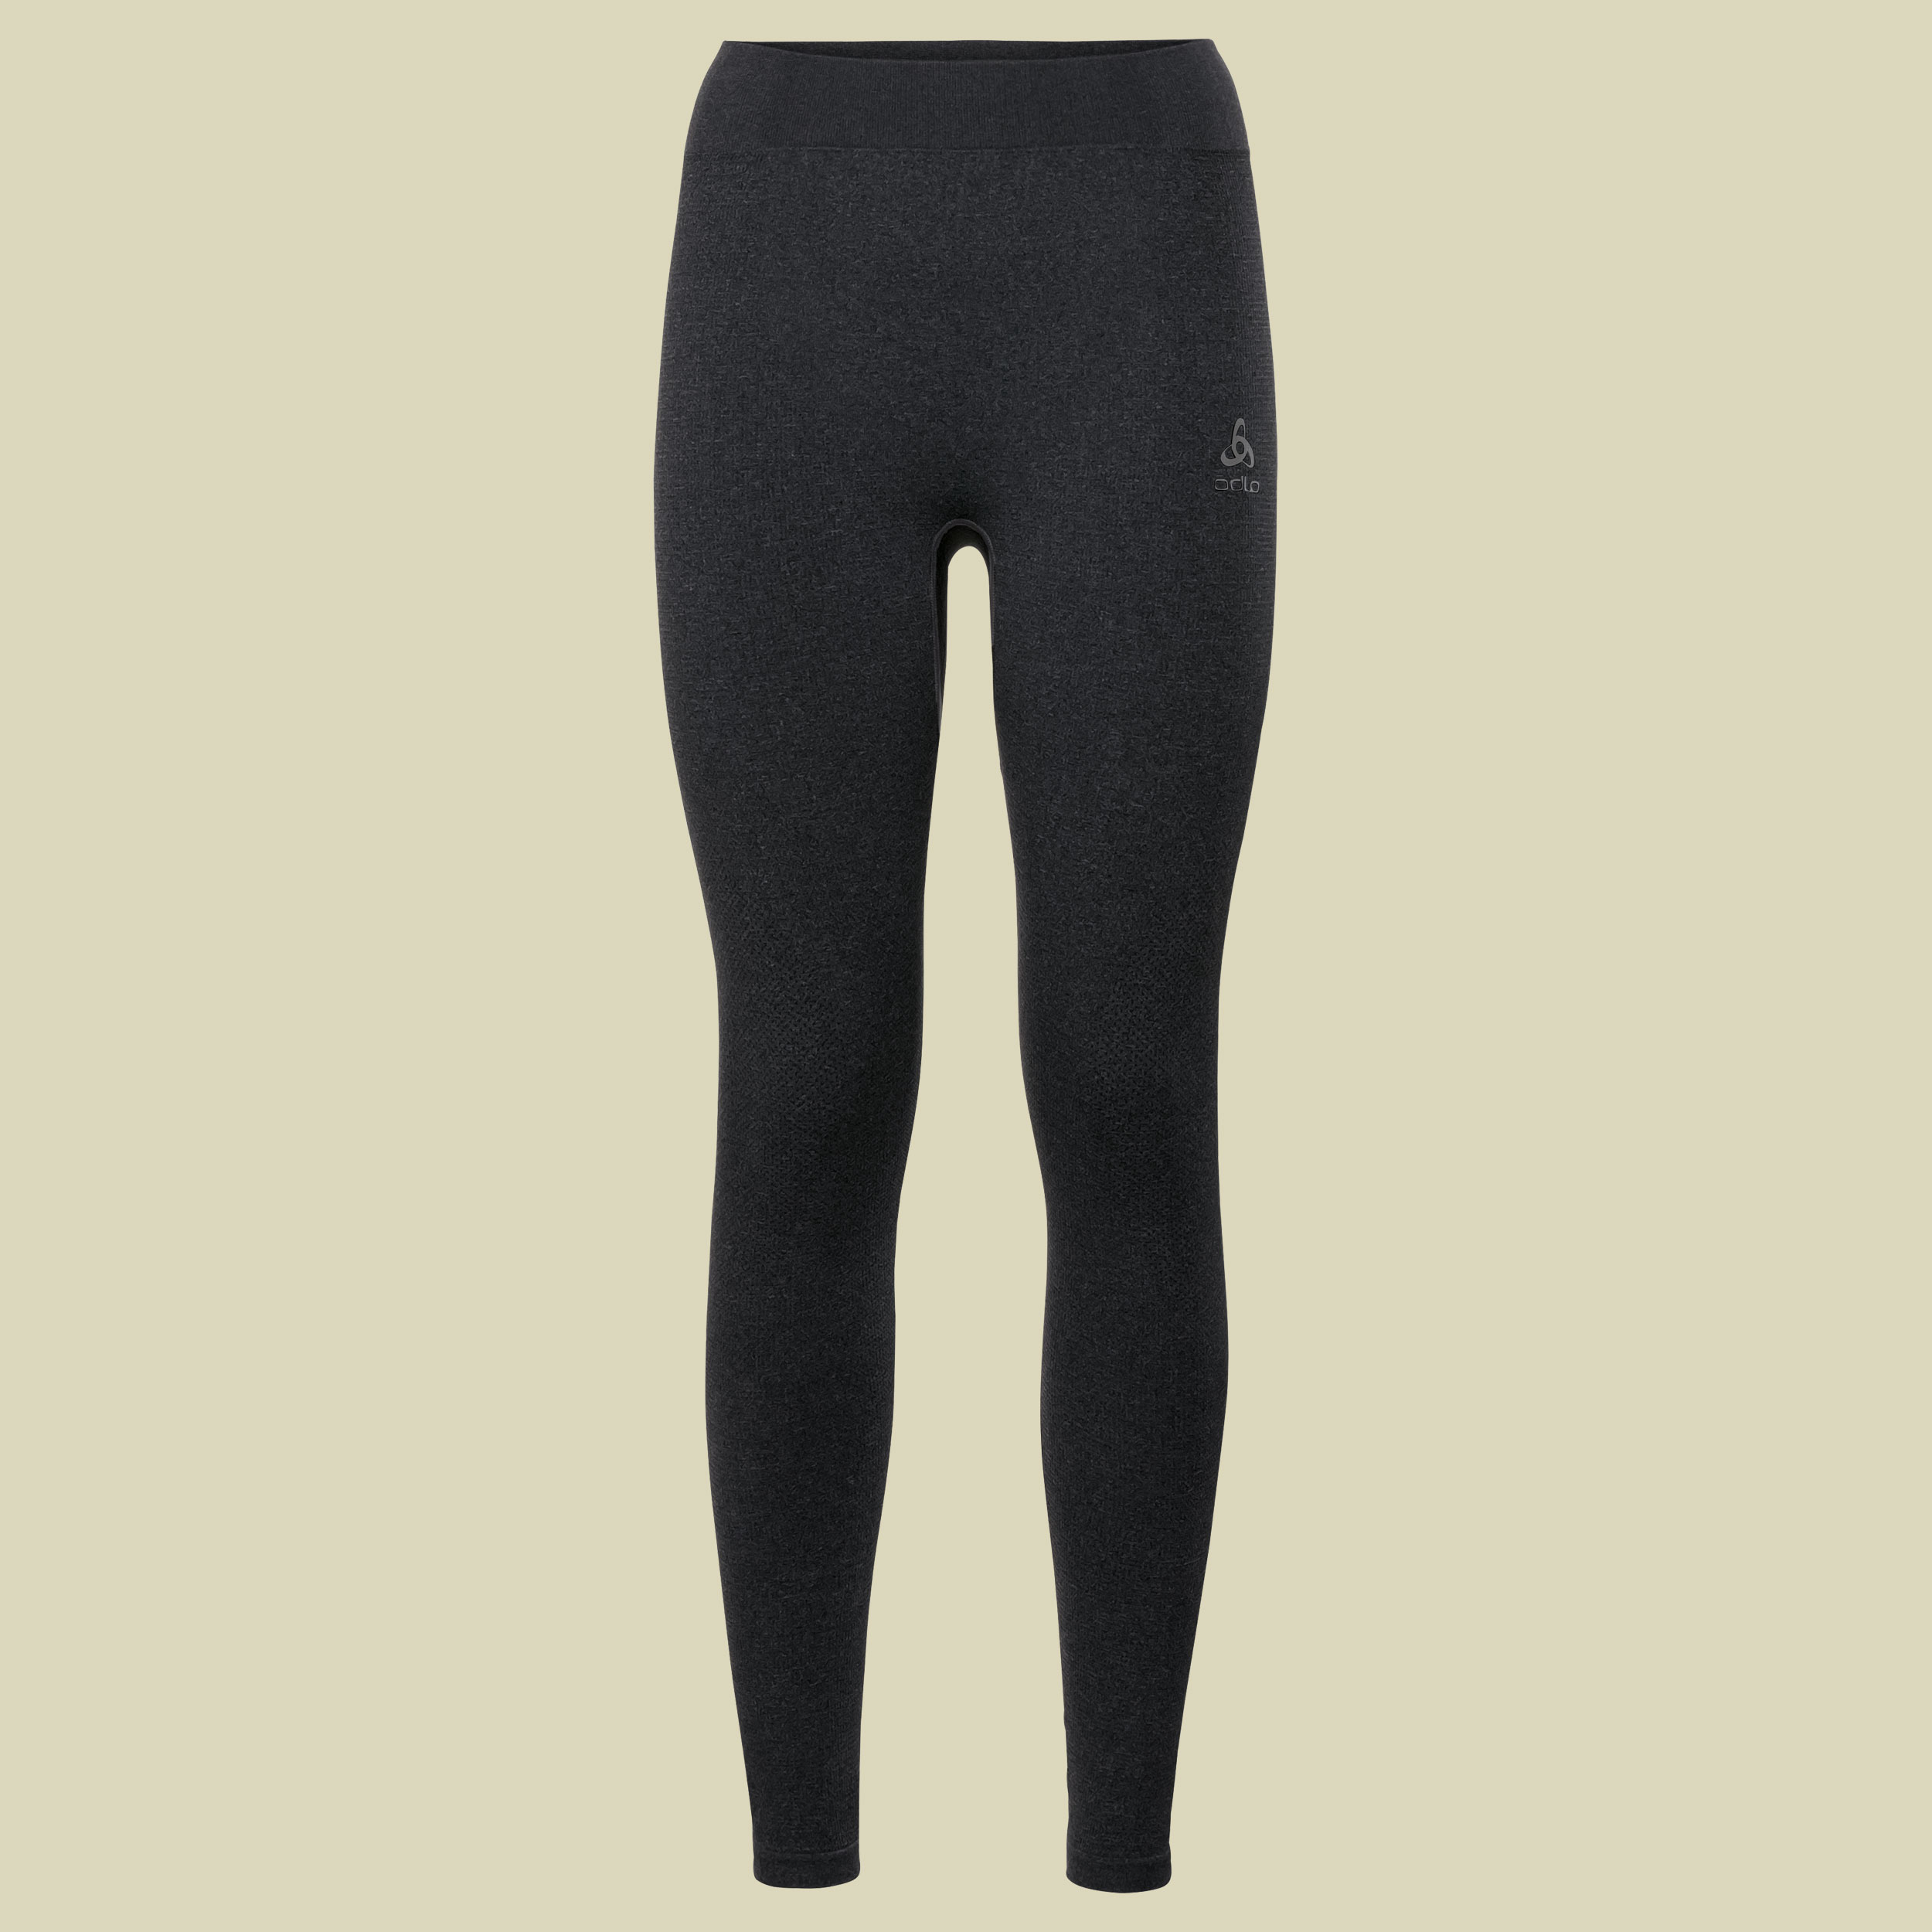 SUW Bottom Pant Performance Warm Women  Größe XL Farbe black-odlo concrete grey